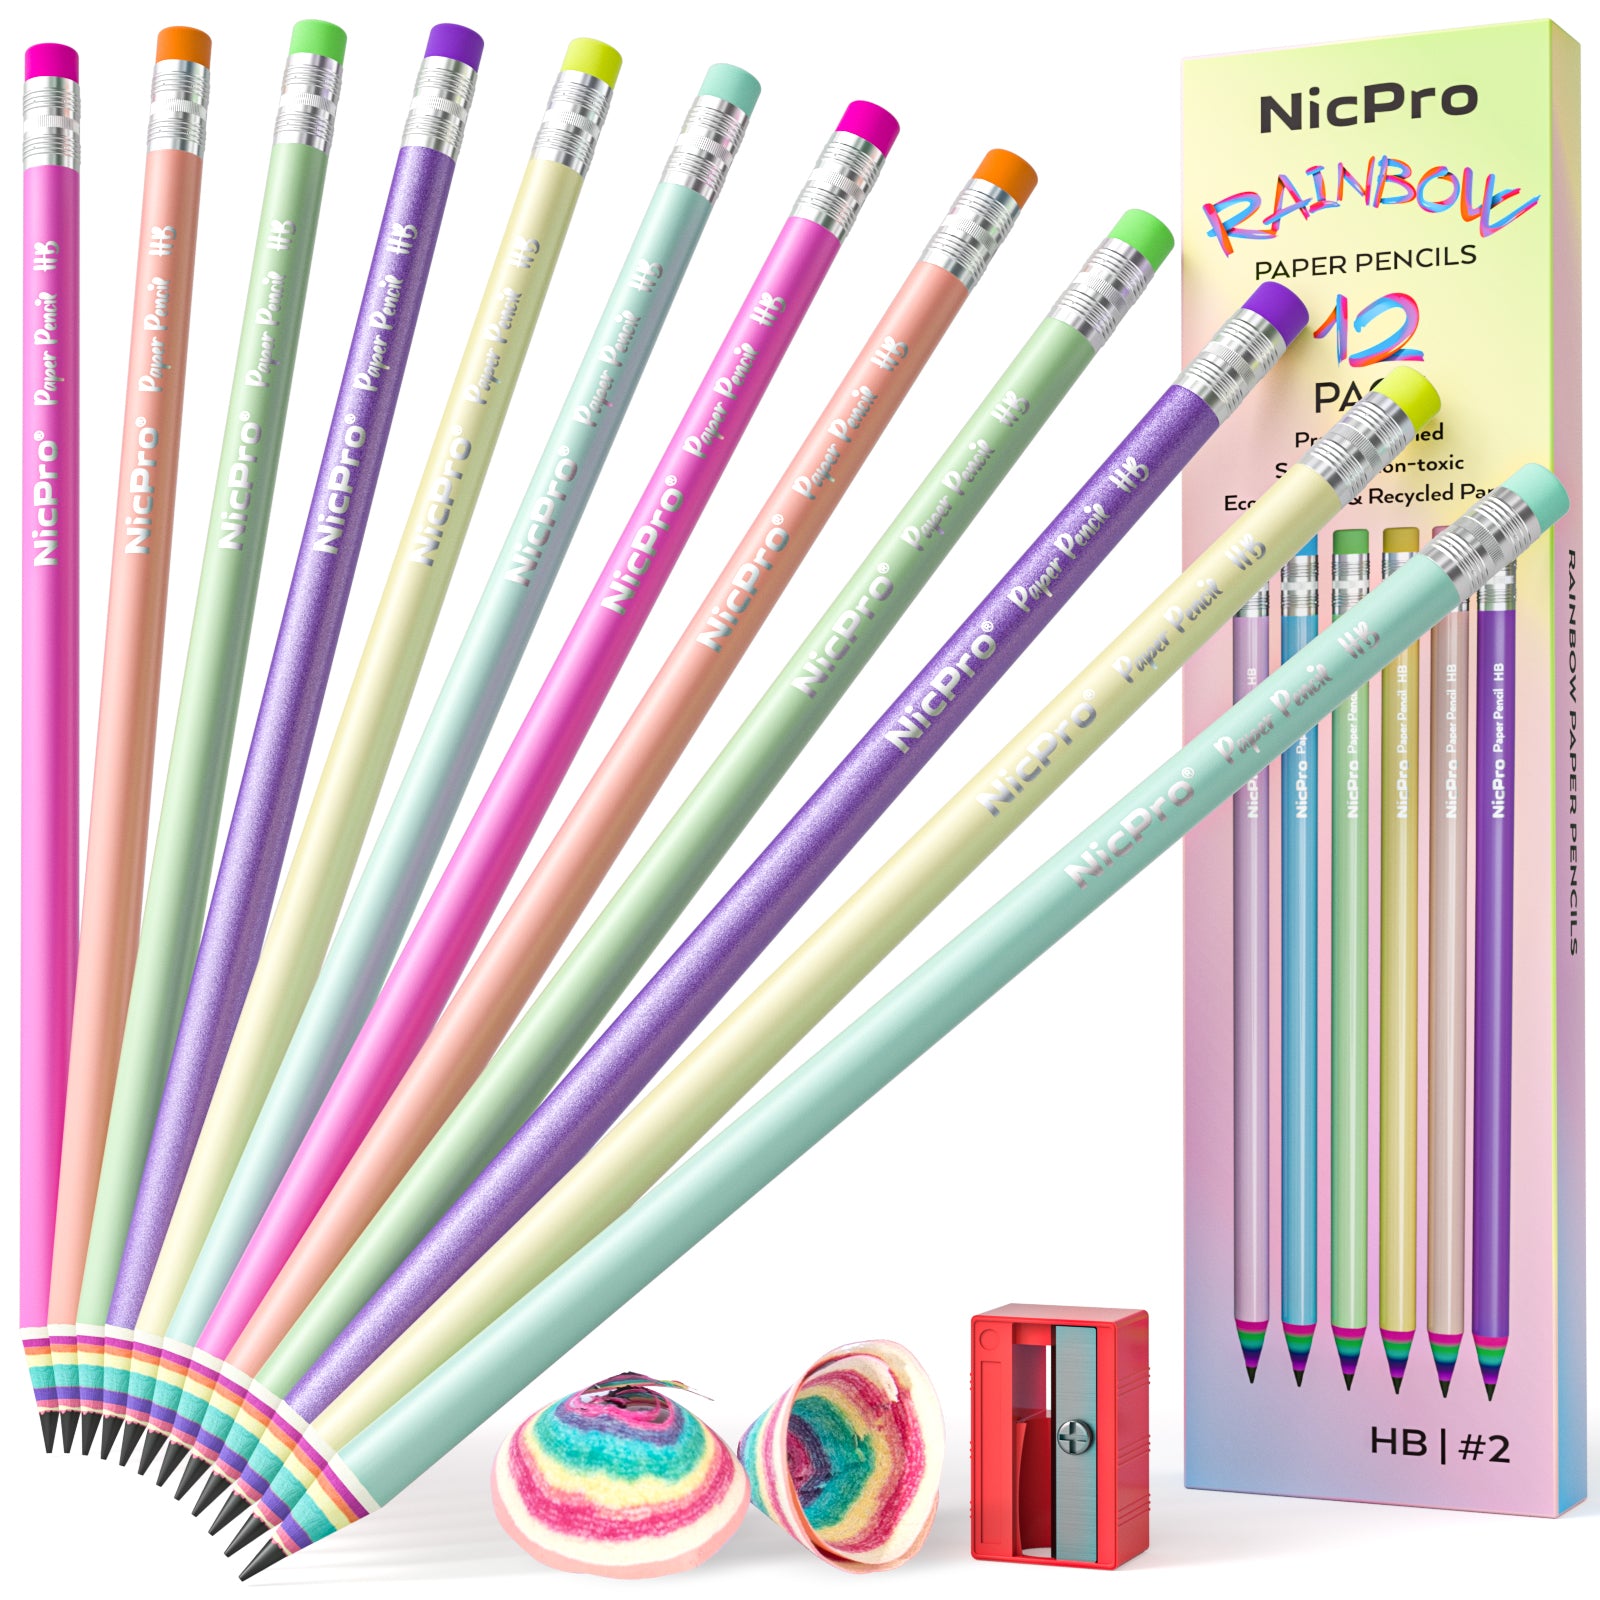 Nicpro 12PCS Pencils #2, HB Rainbow Colored Paper Pencils, Pre-Sharpen